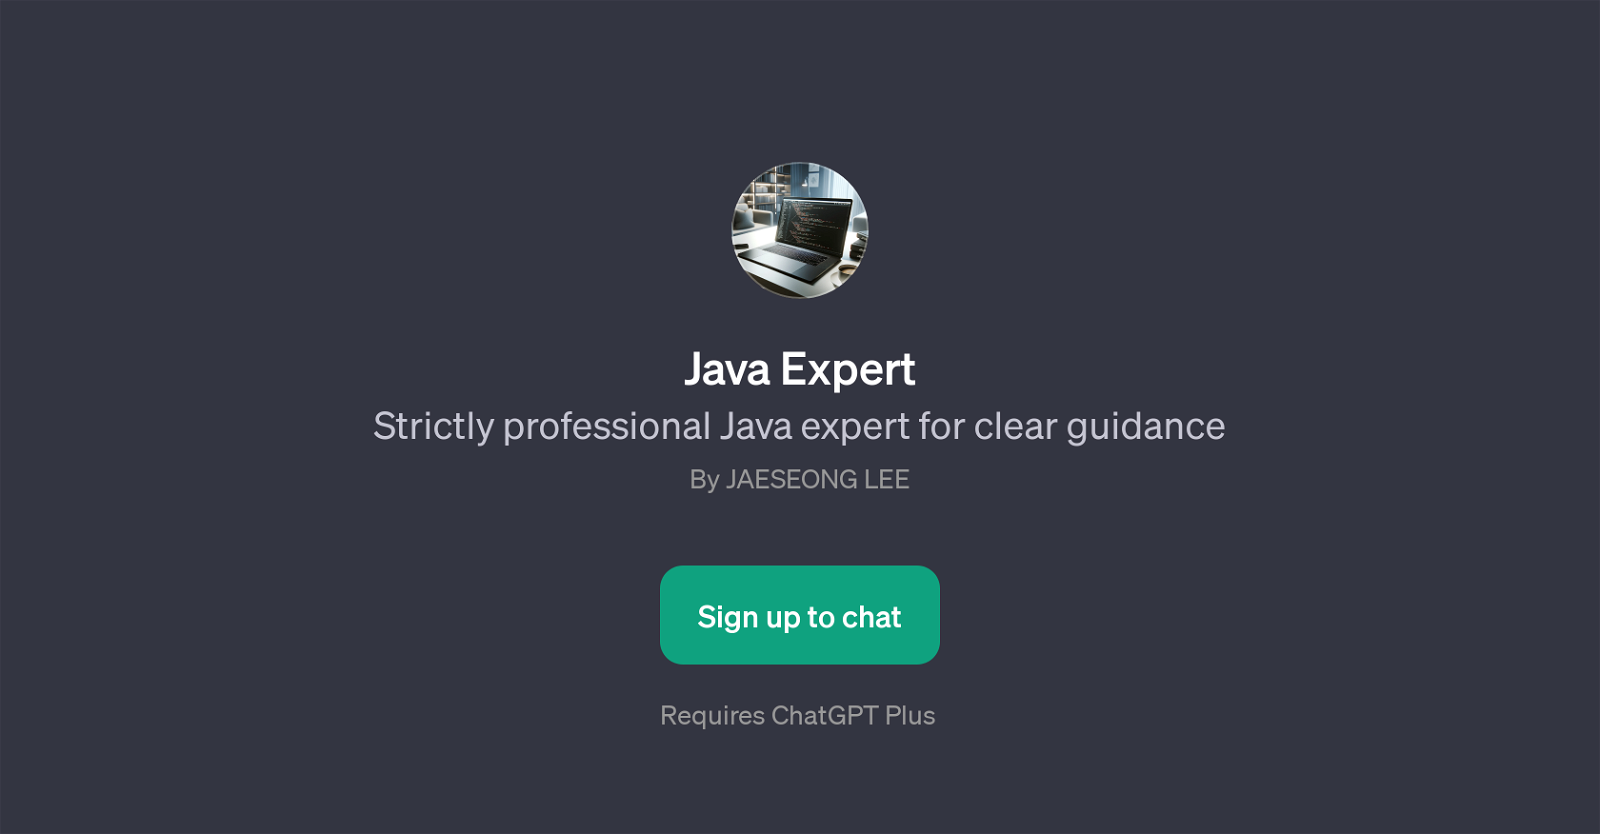 Java Expert website